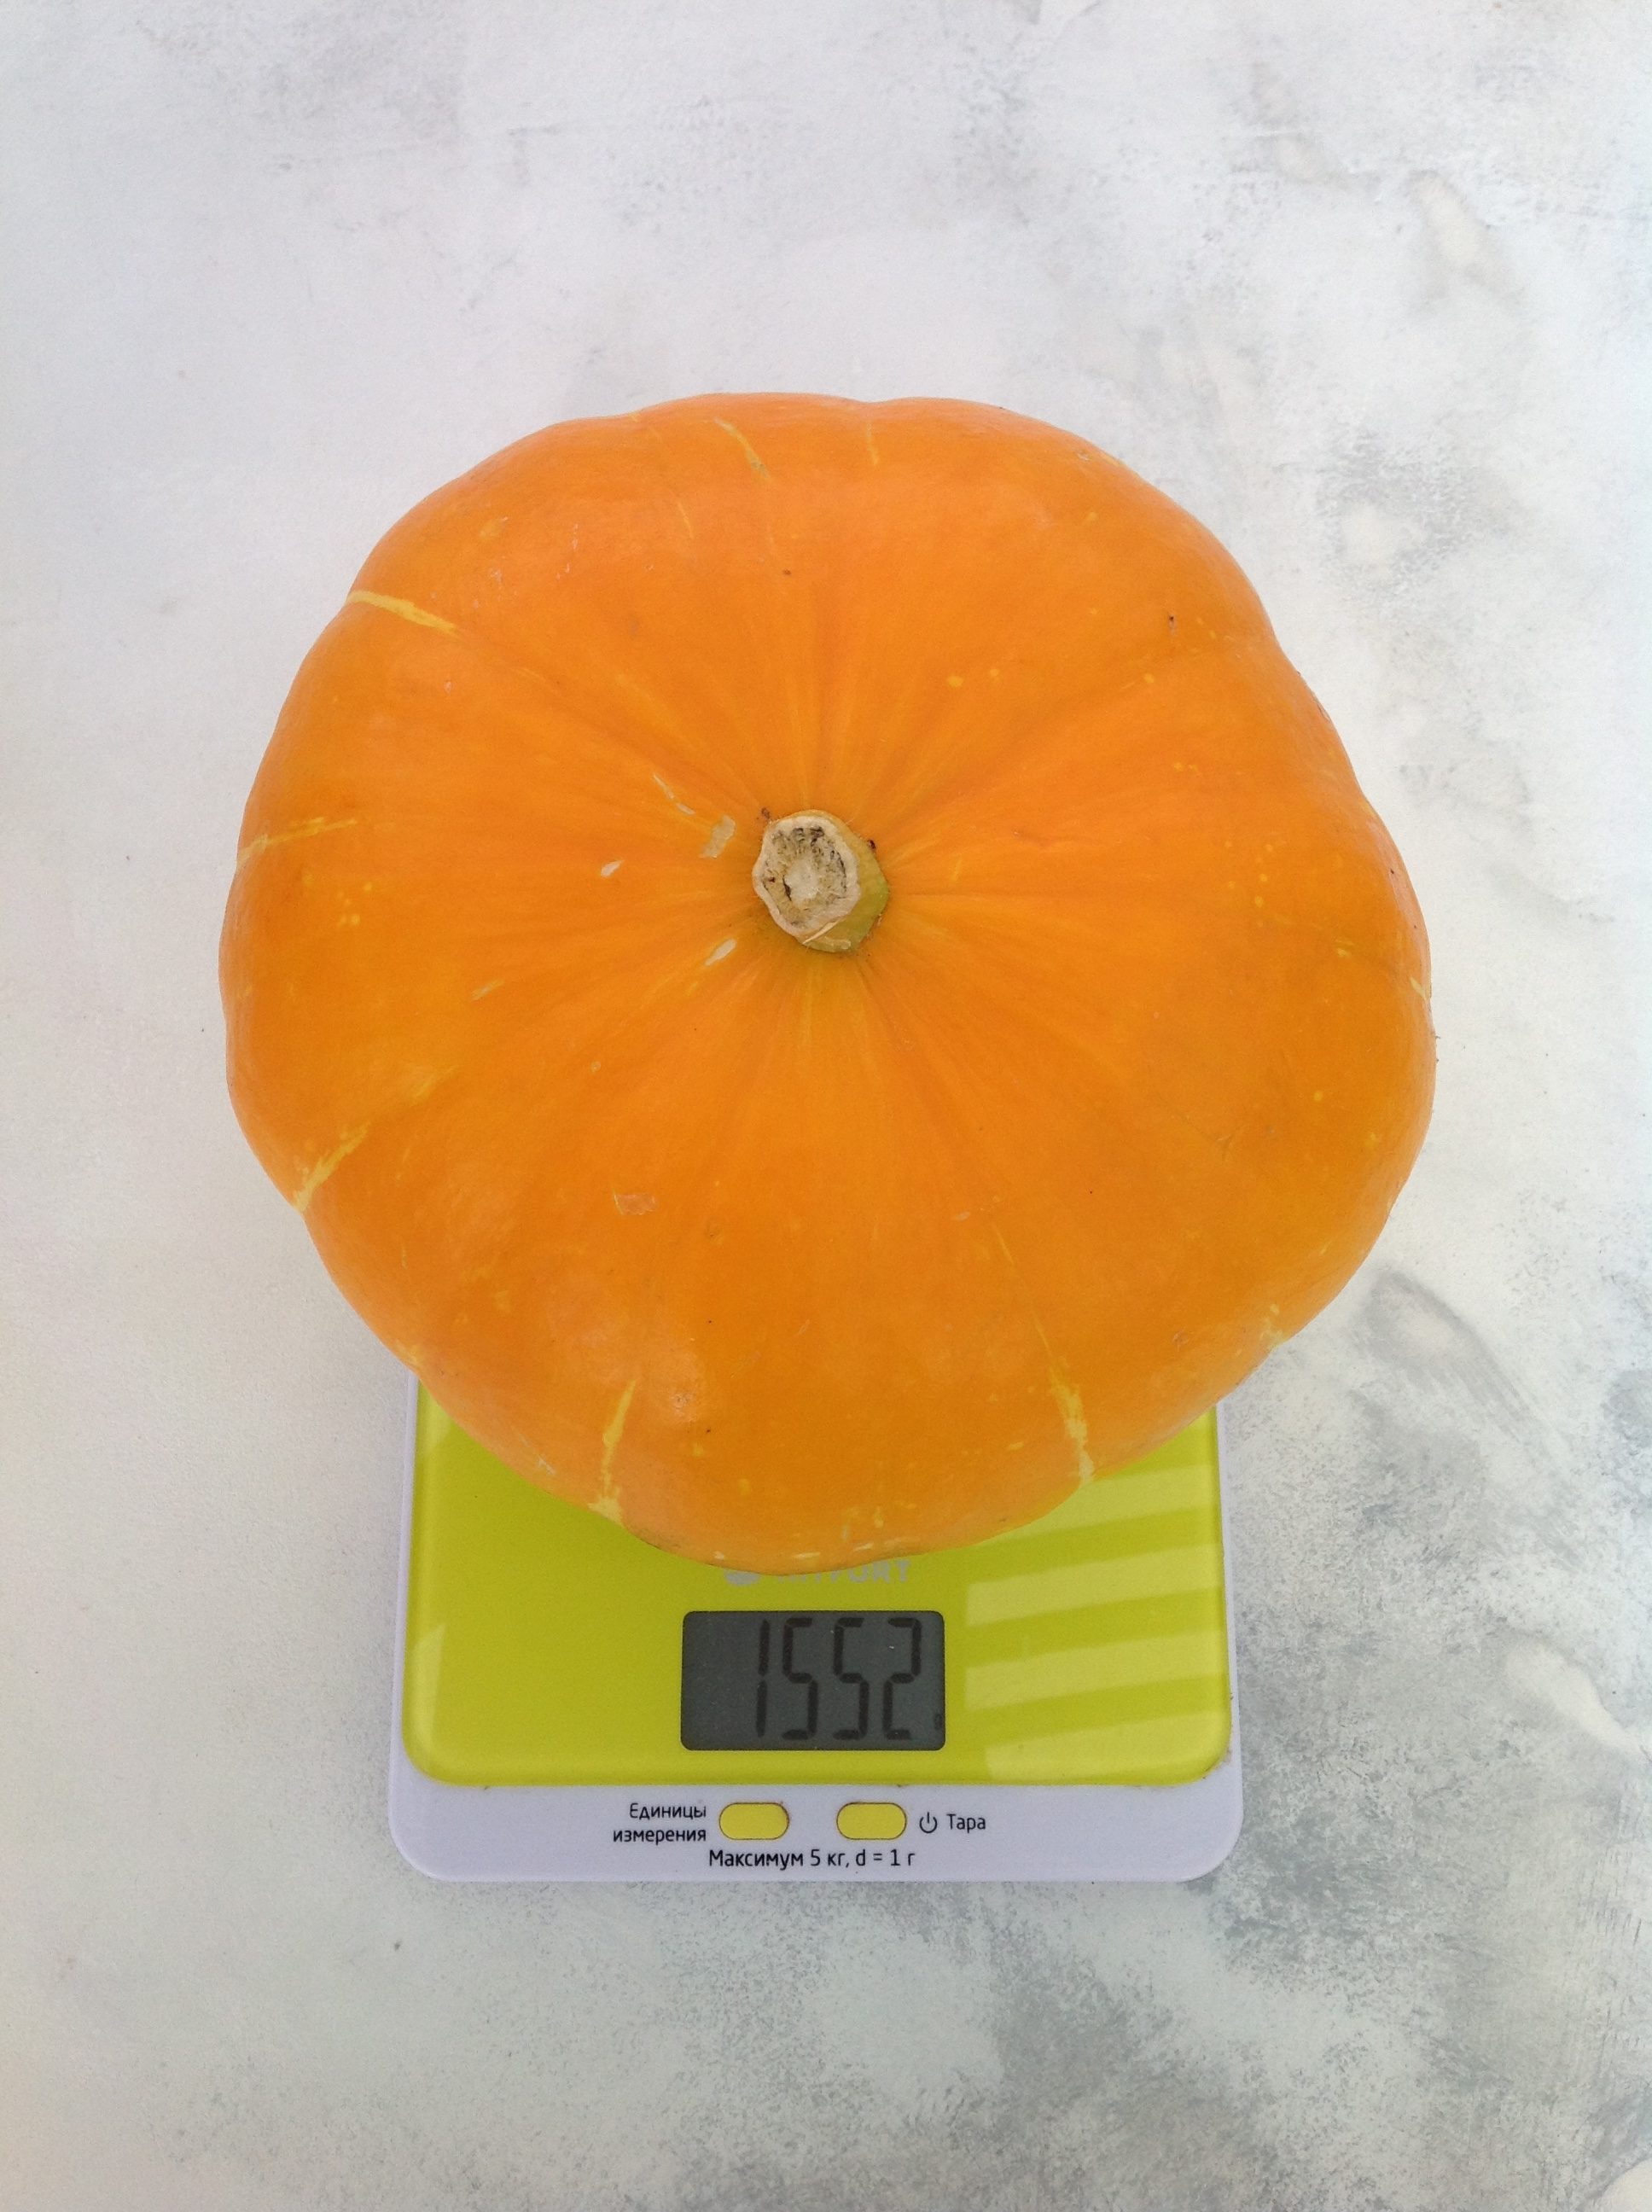 How much does a small pumpkin weigh?